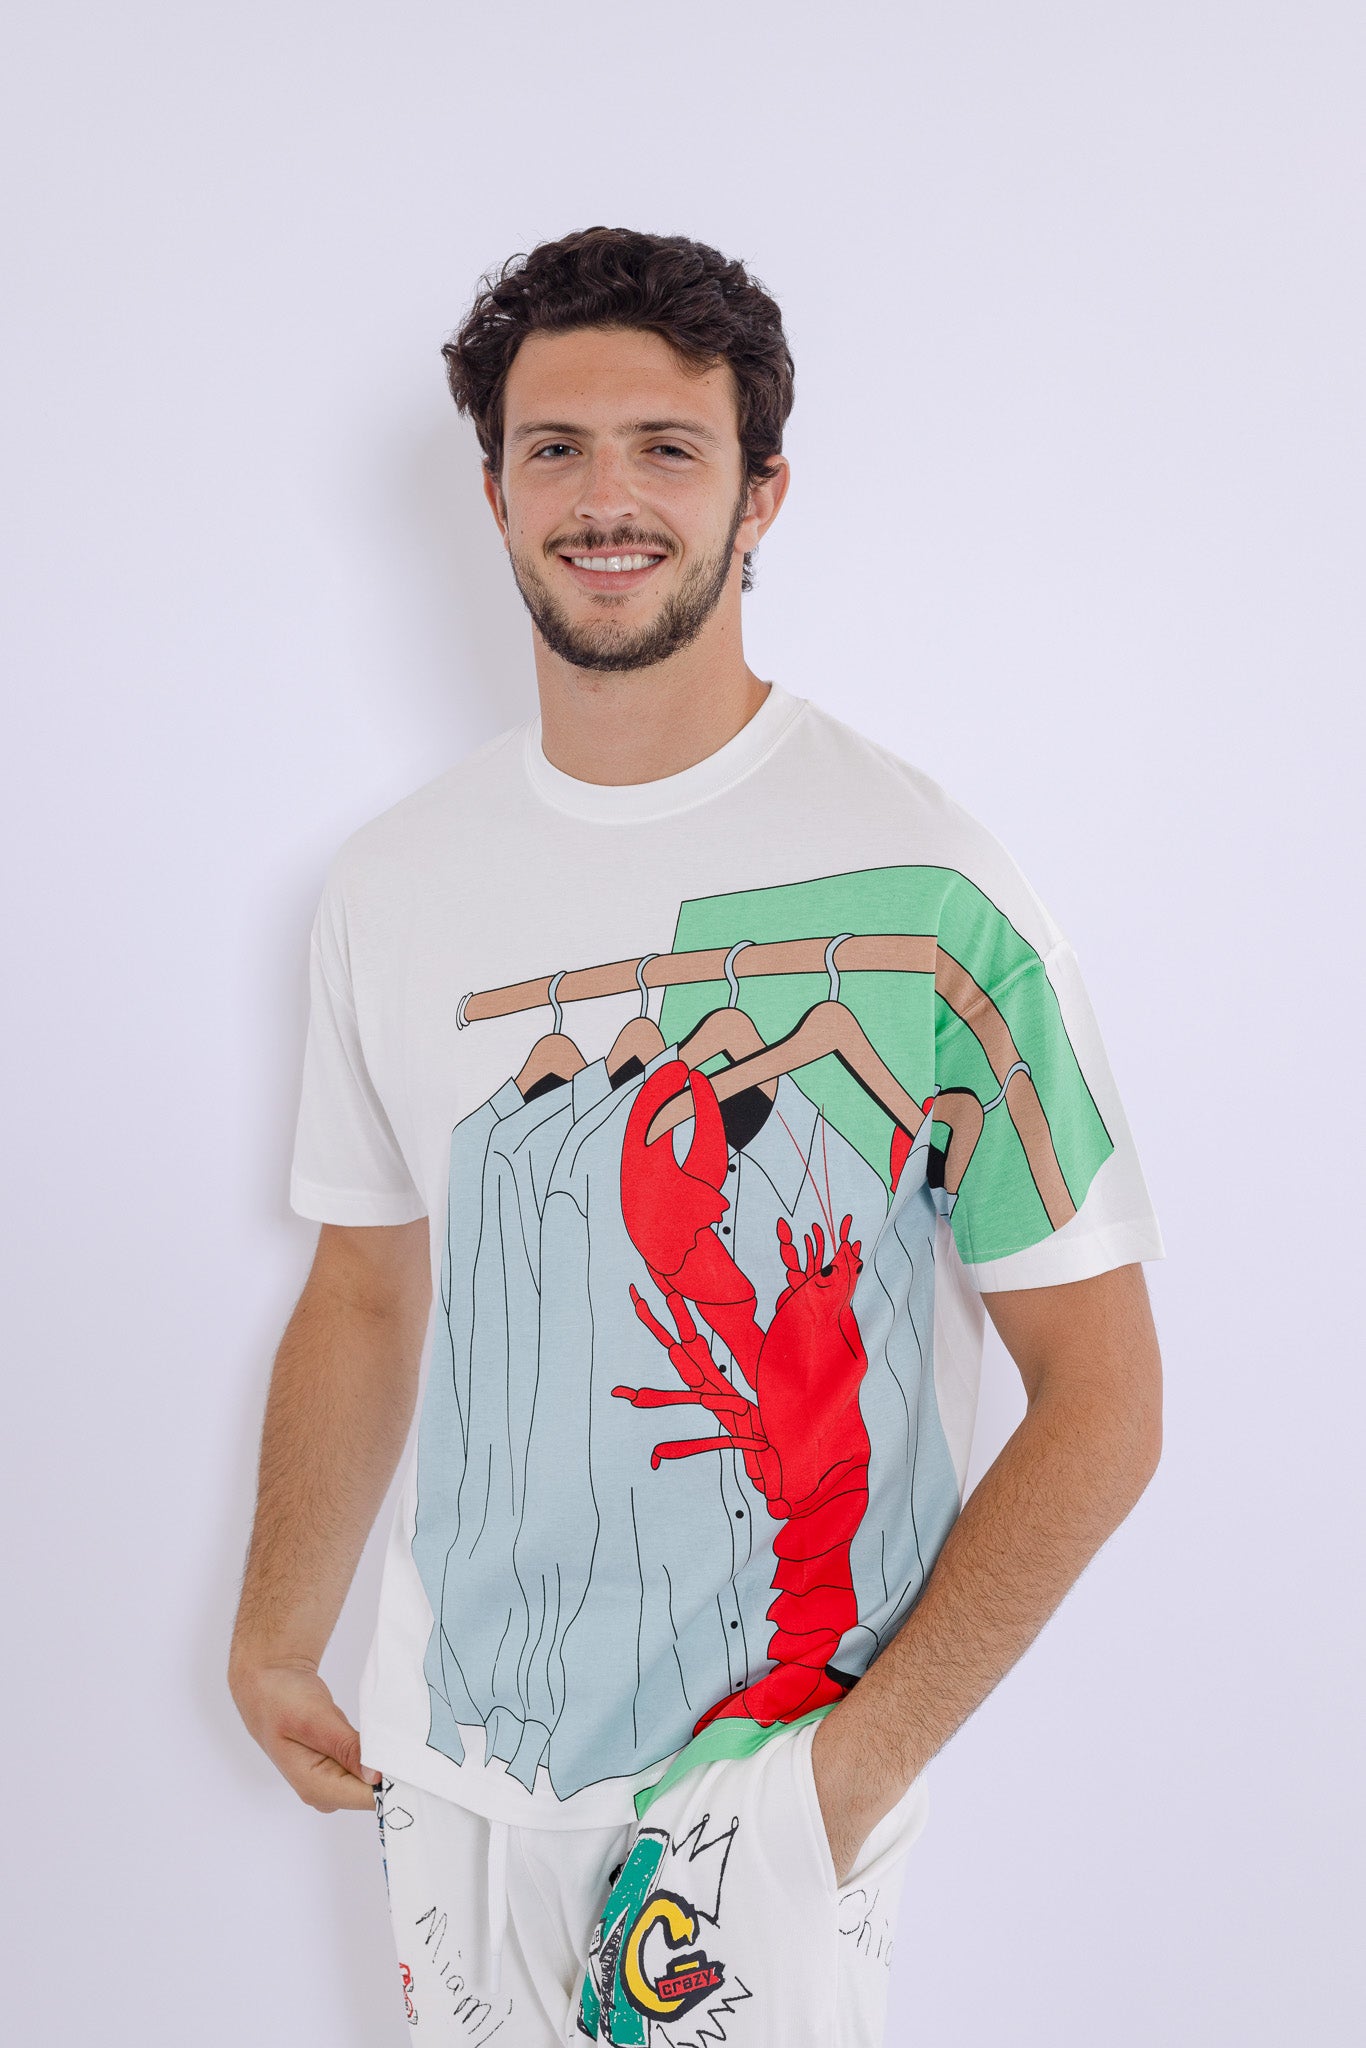 Boston Lobster T-Shirt